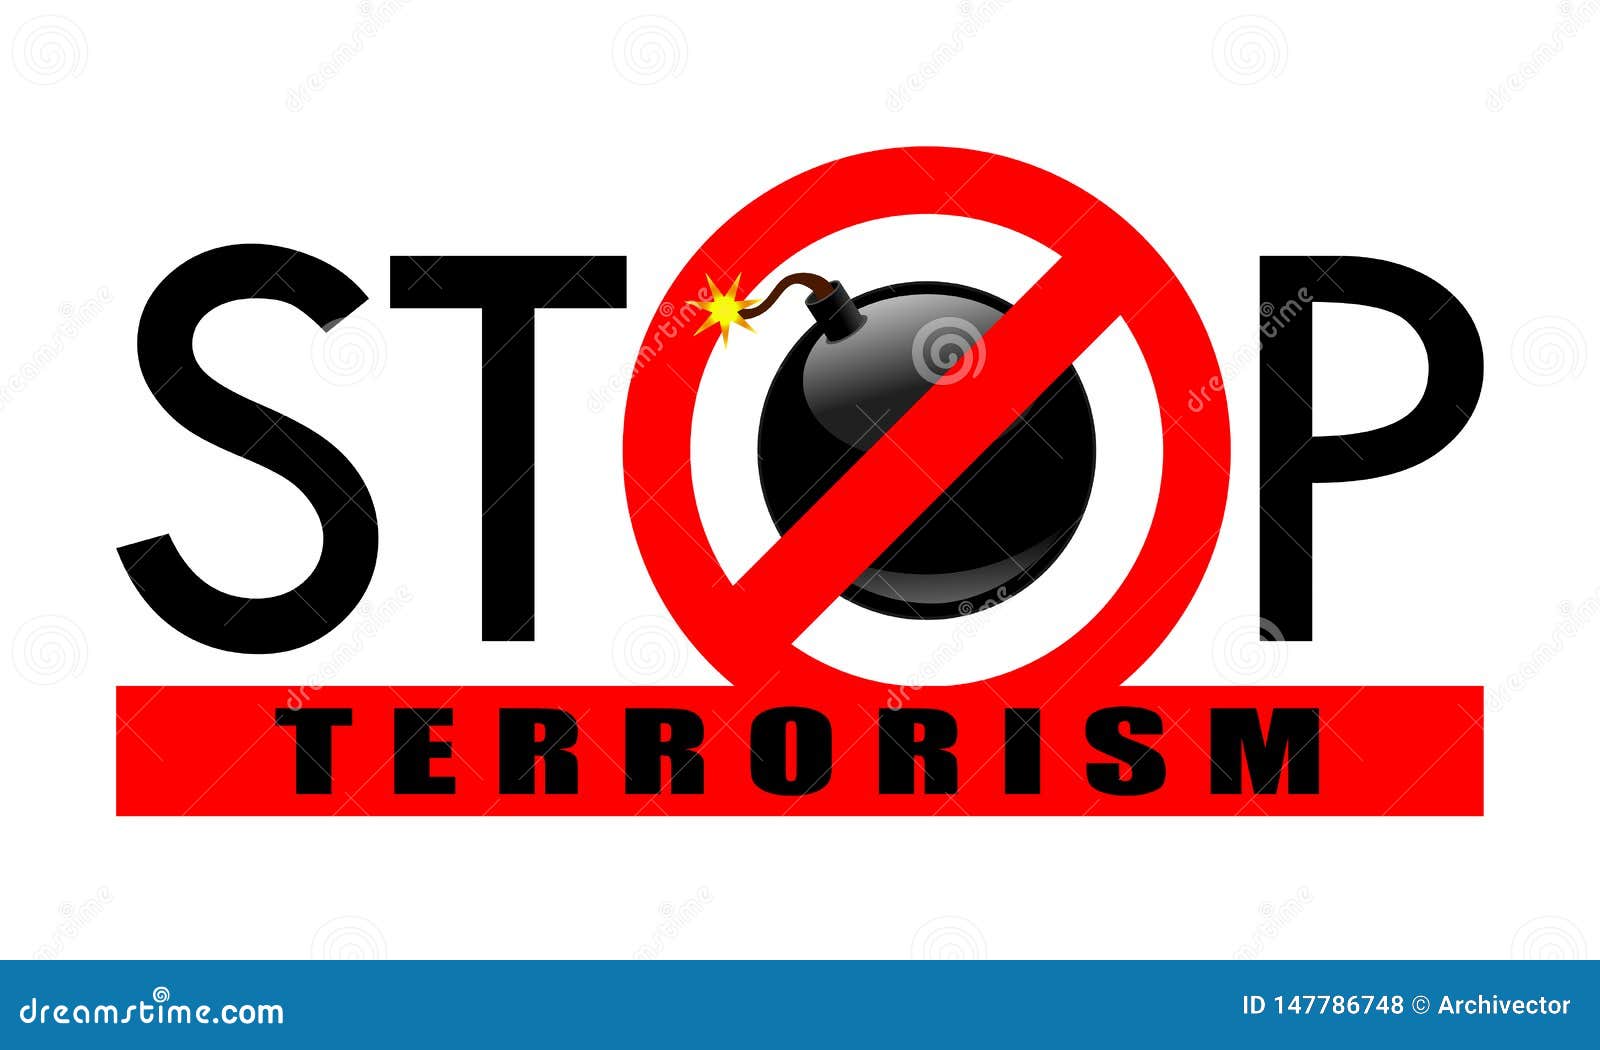 Угрожать нельзя. Стоп терроризм. Знак терроризма. Символ террора. Нет террору знак.